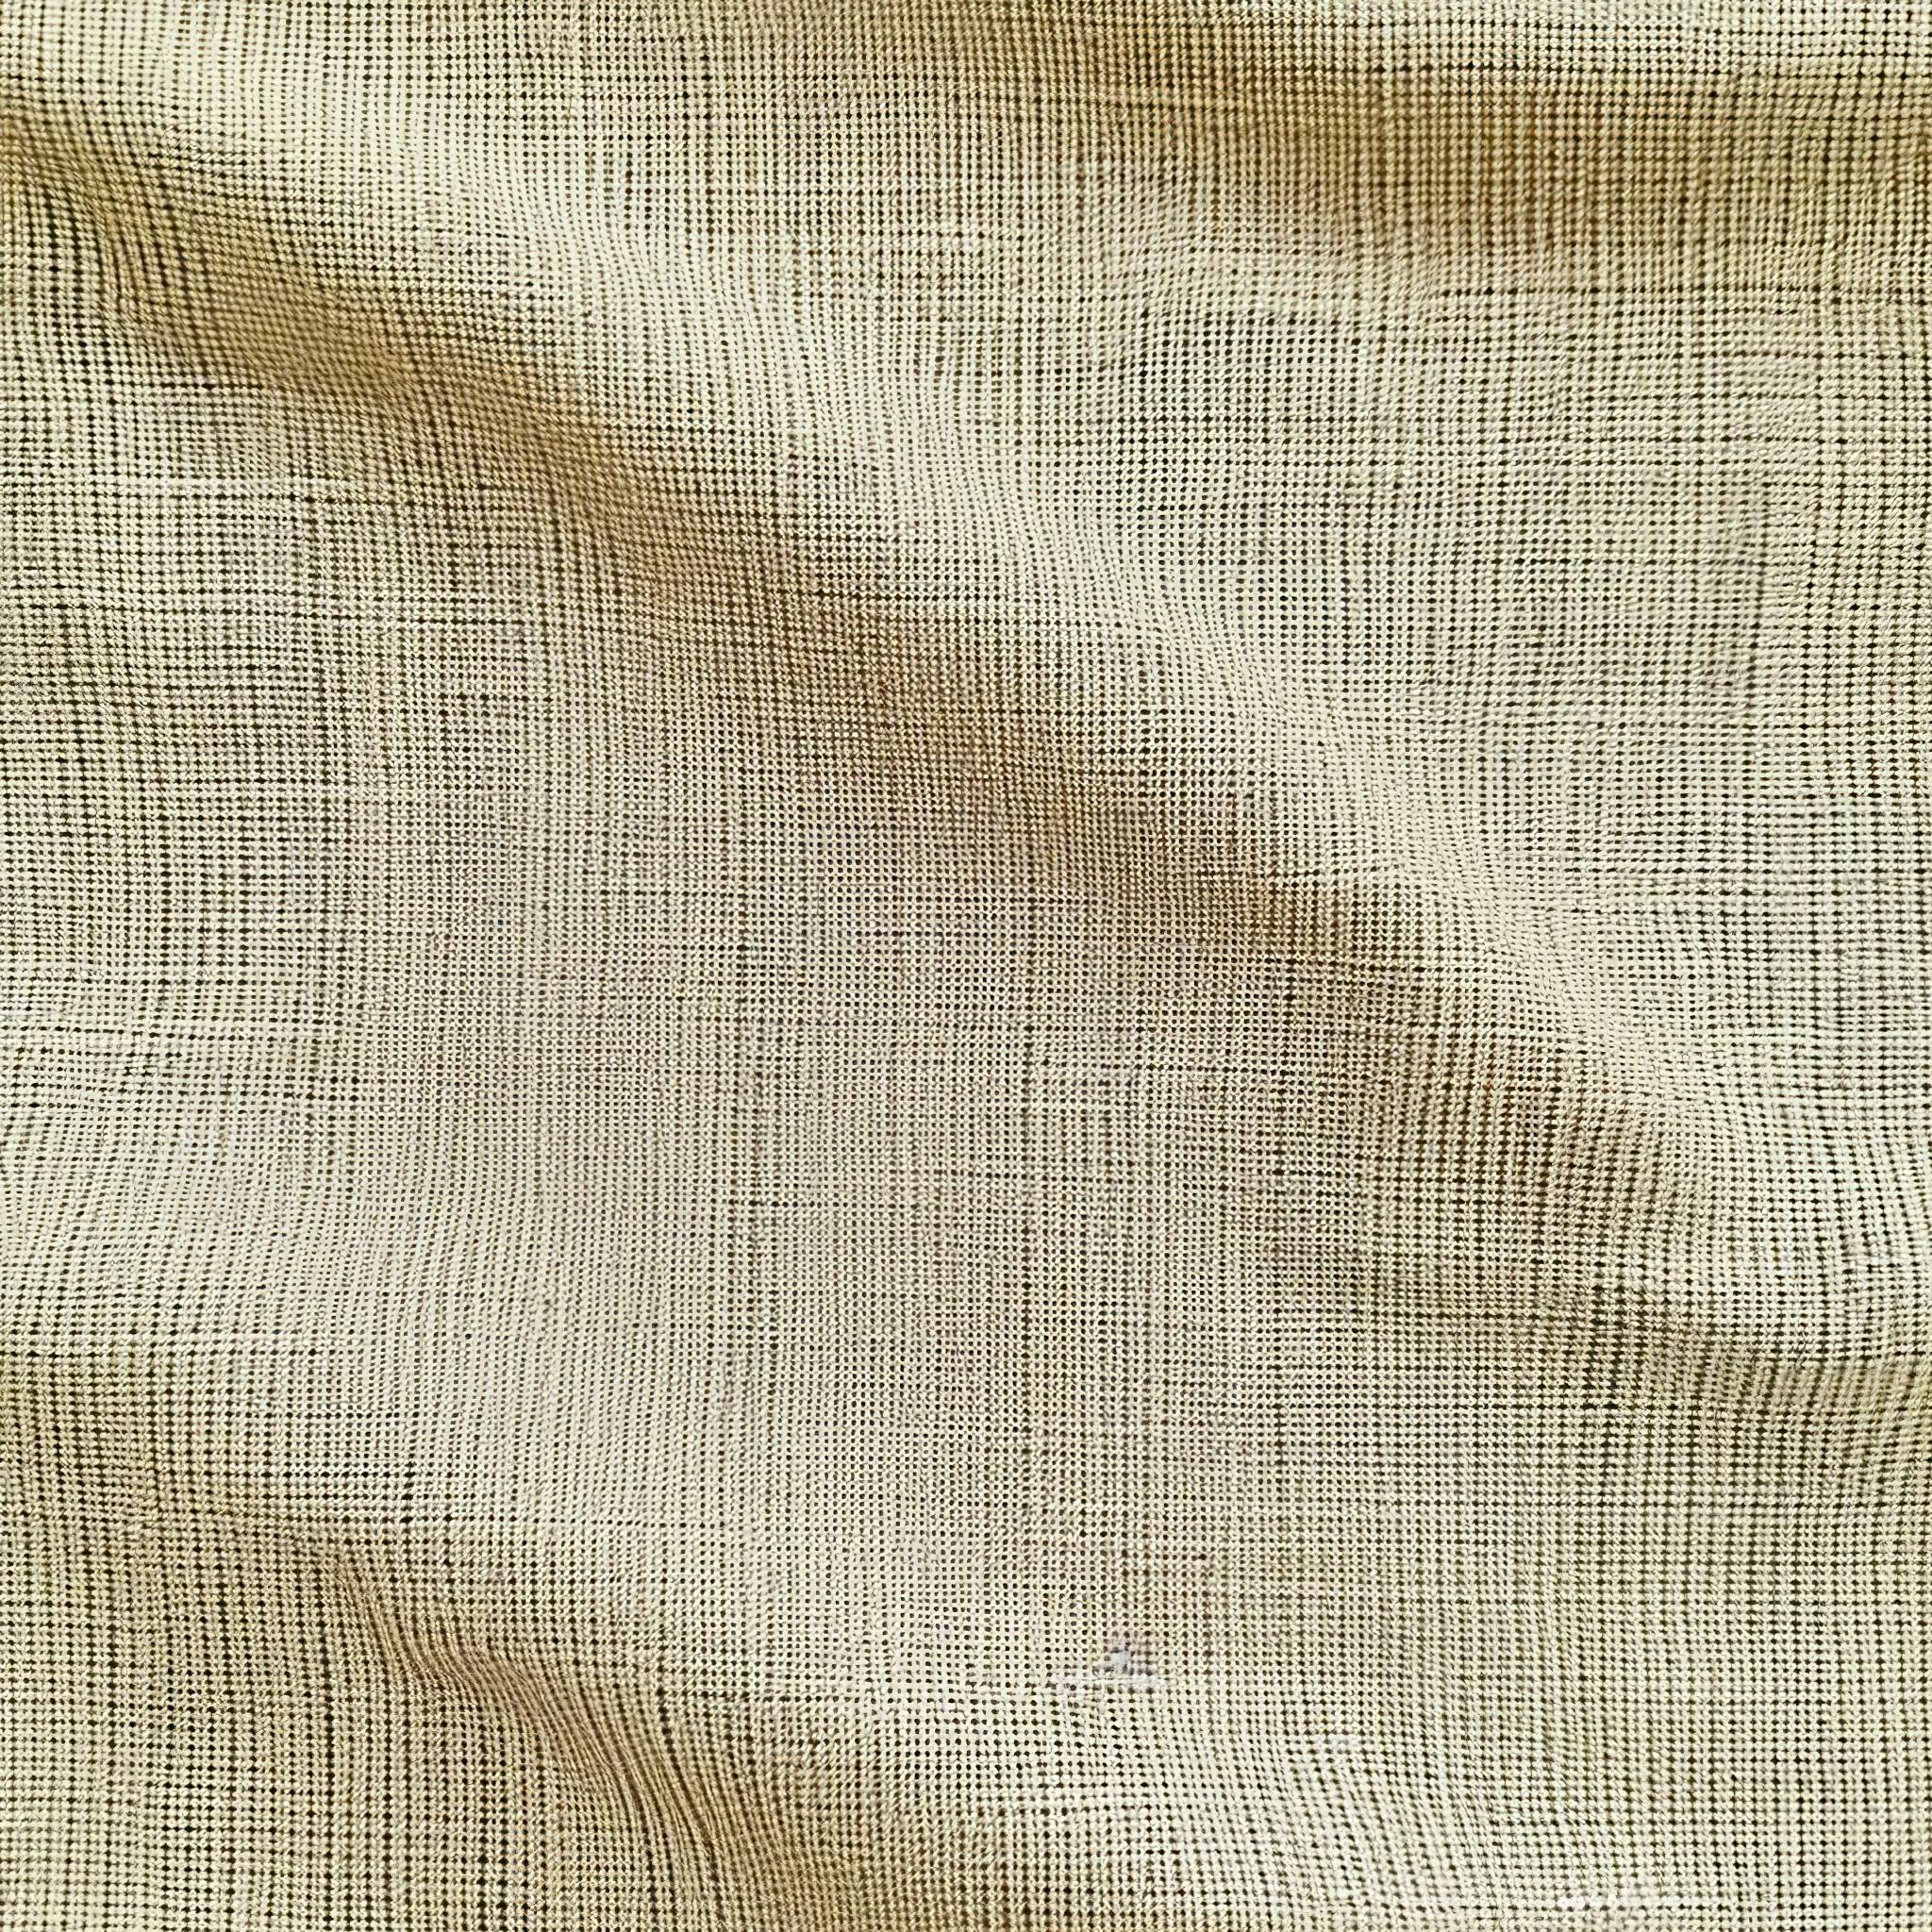 Beige cloth fabric texture